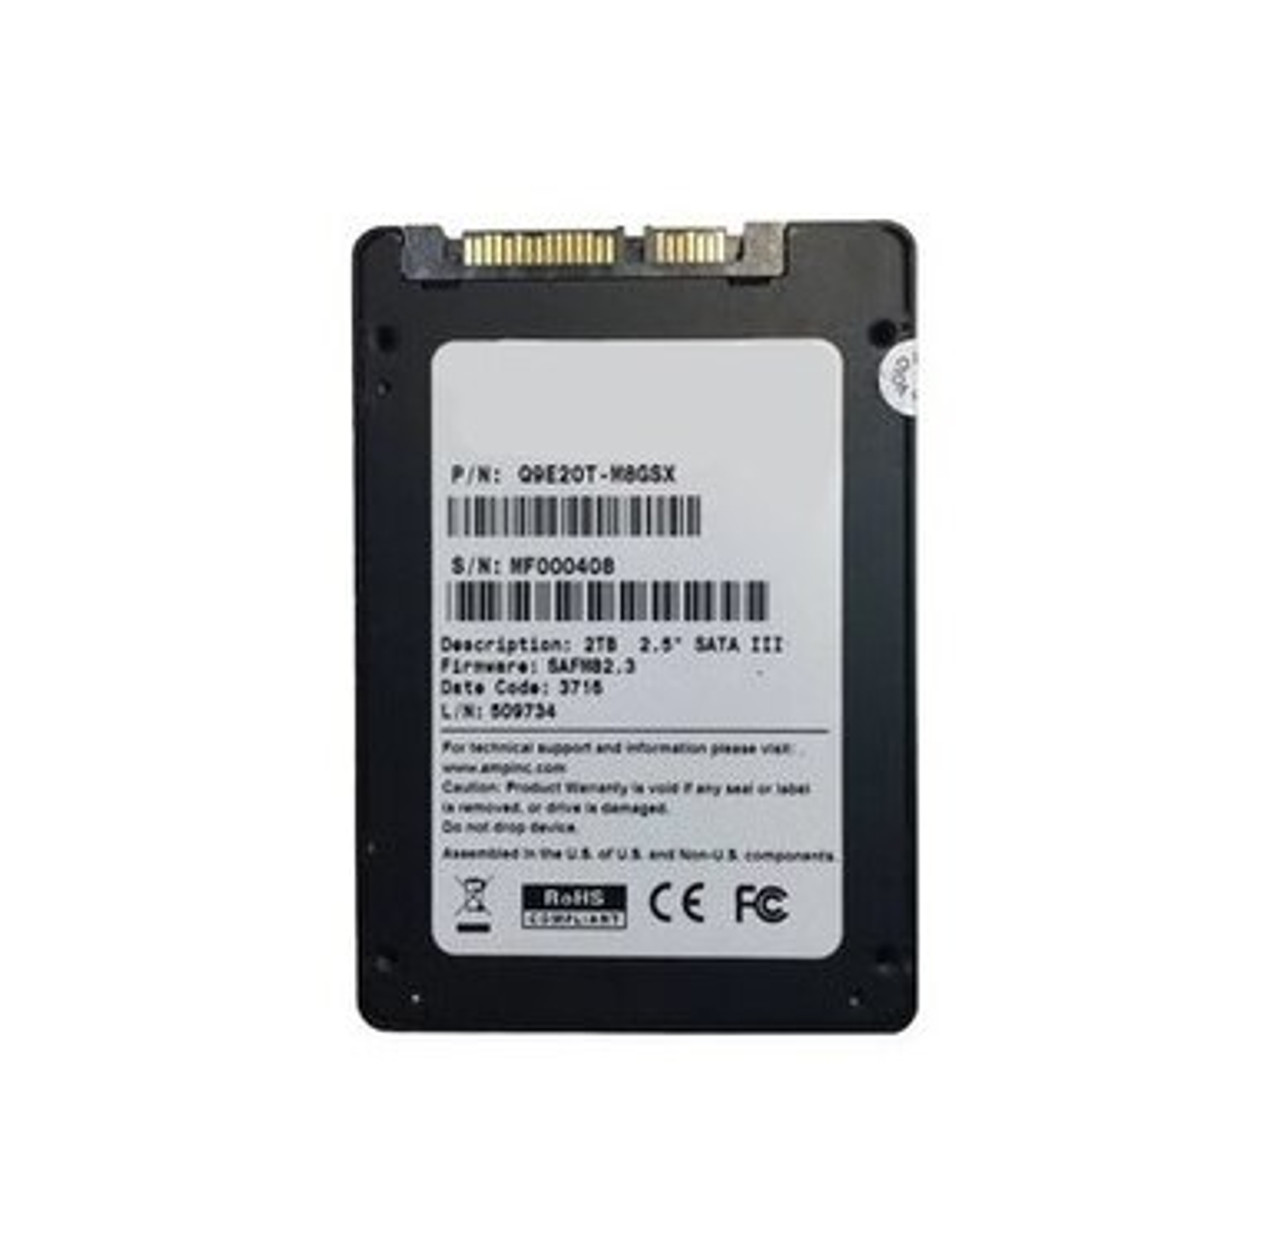 SATA Pseudo SLC Kioxia/Toshiba Industrial Grade 16GB-1TB